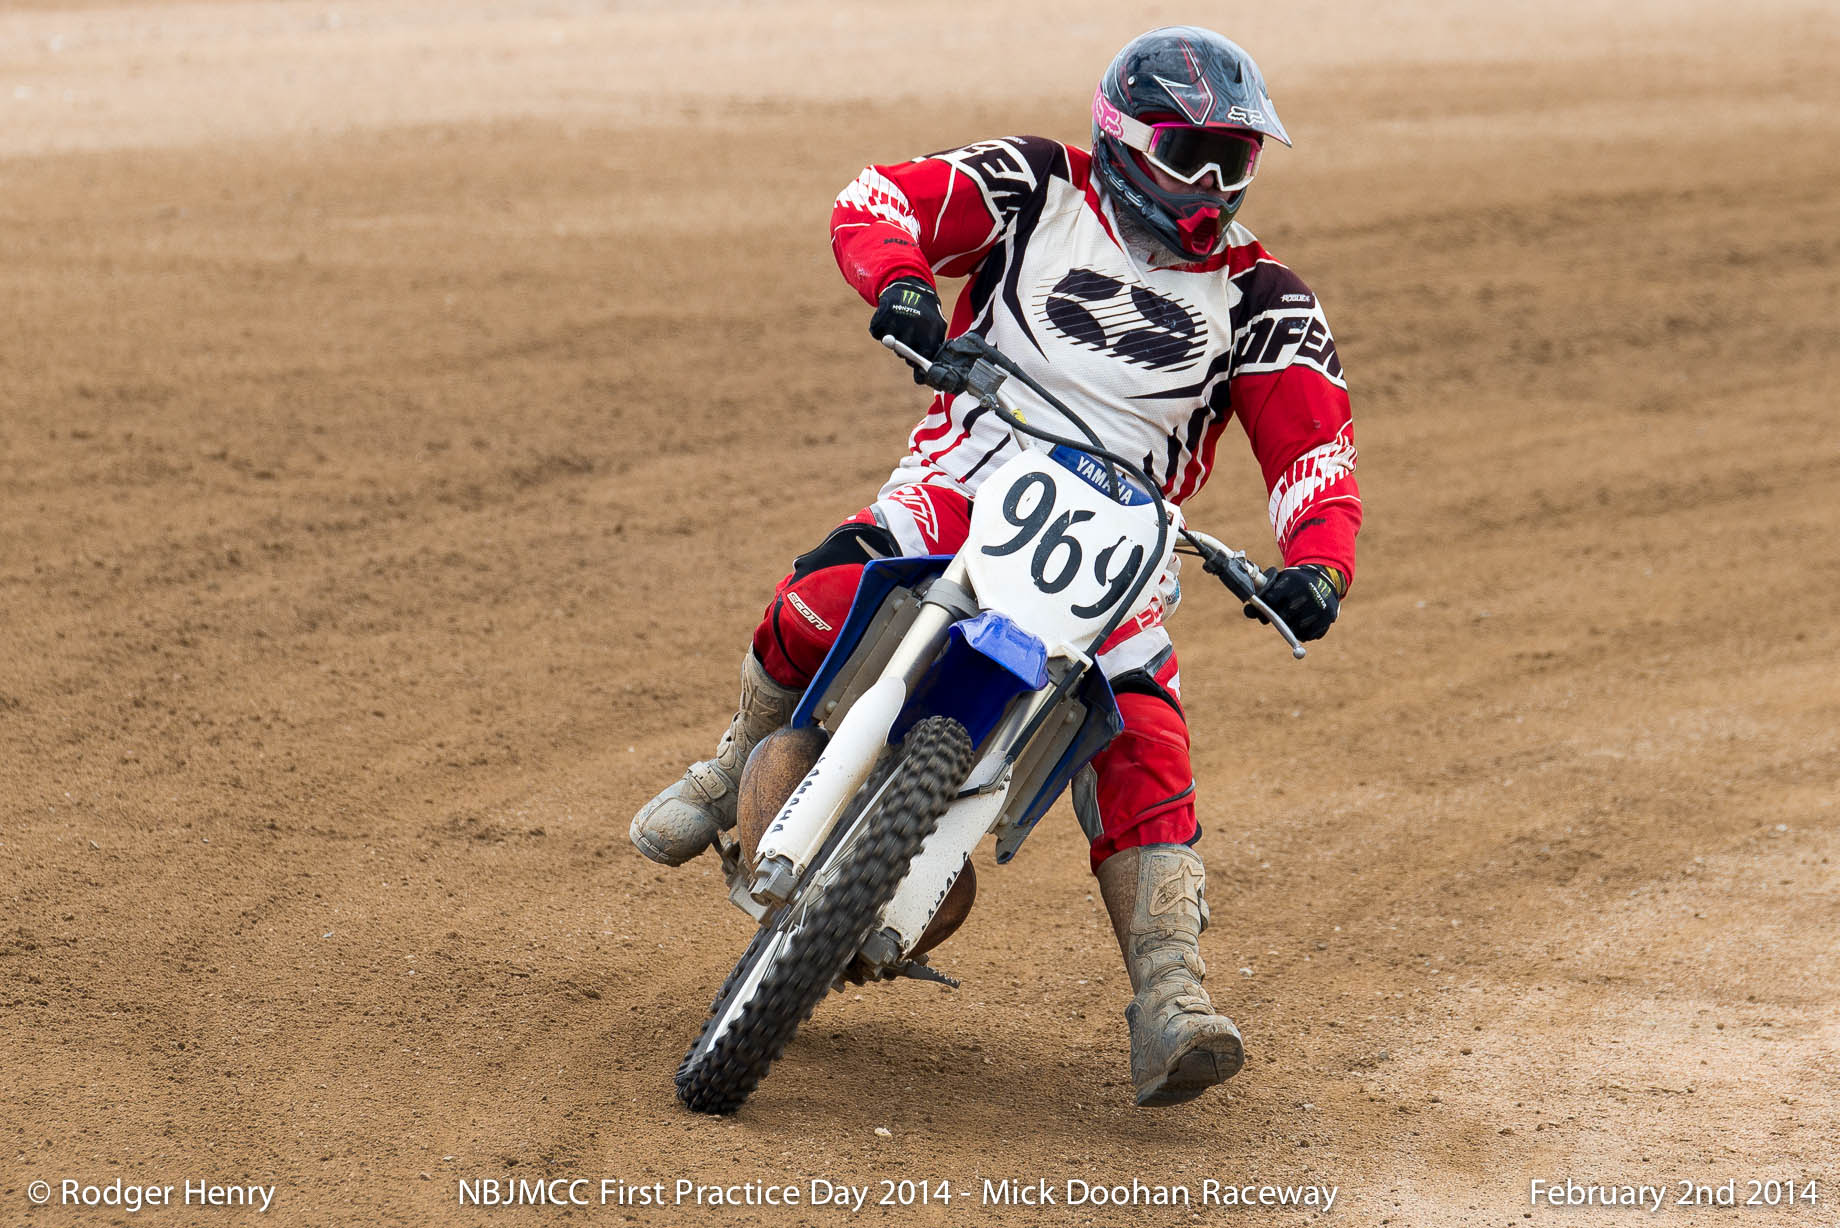 Motorcycle Racing - Dirt Track / Racing / Nbjmcc | Sun 02 Feb 2014 | A ...